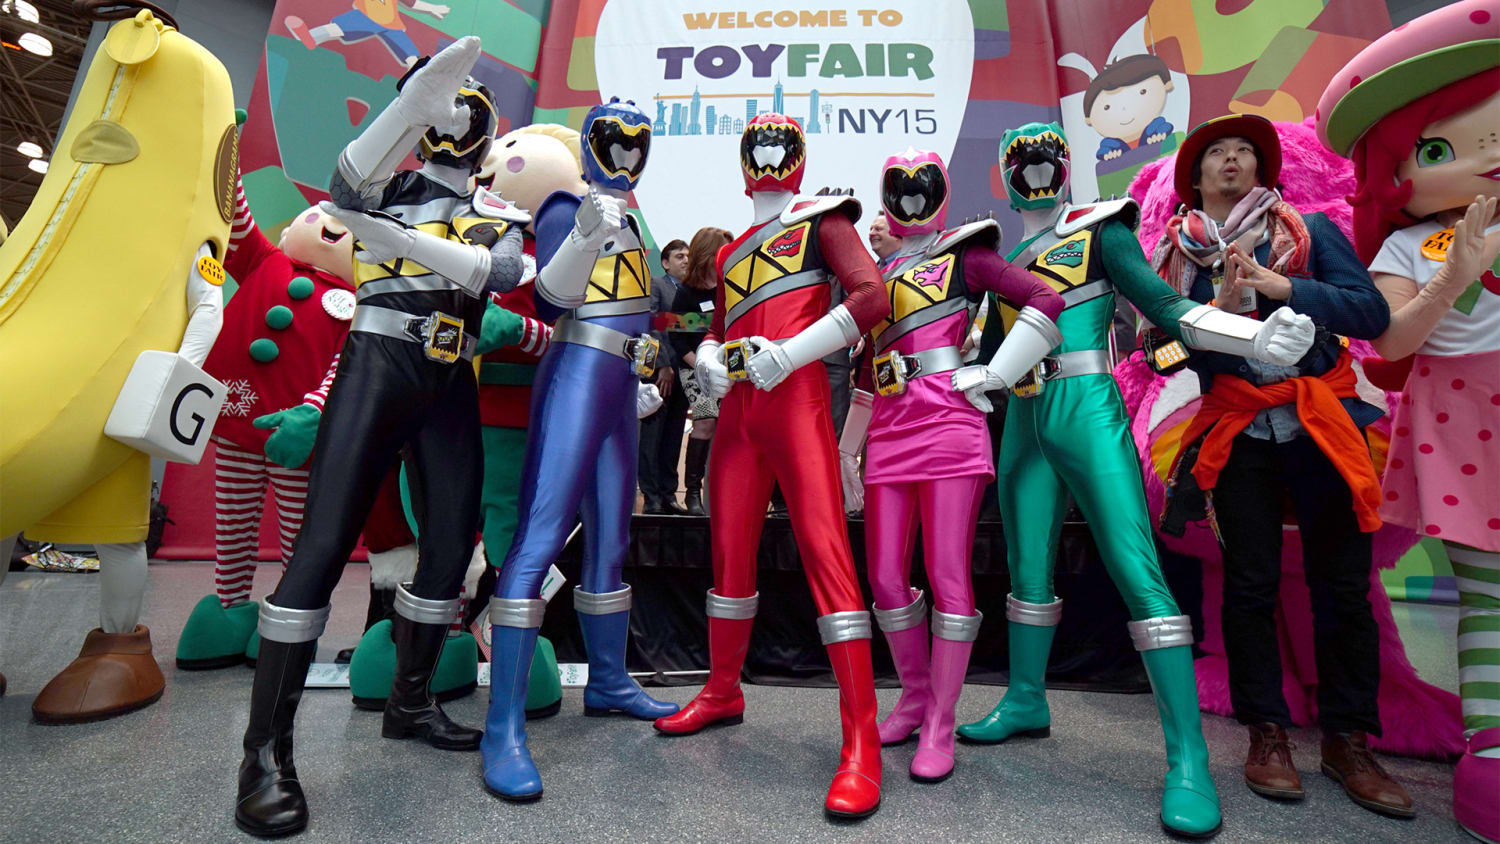 American International Toy Fair 2019. New York Toy. Ярмарка игрушек Toy Fair и бластеры. Toy fair